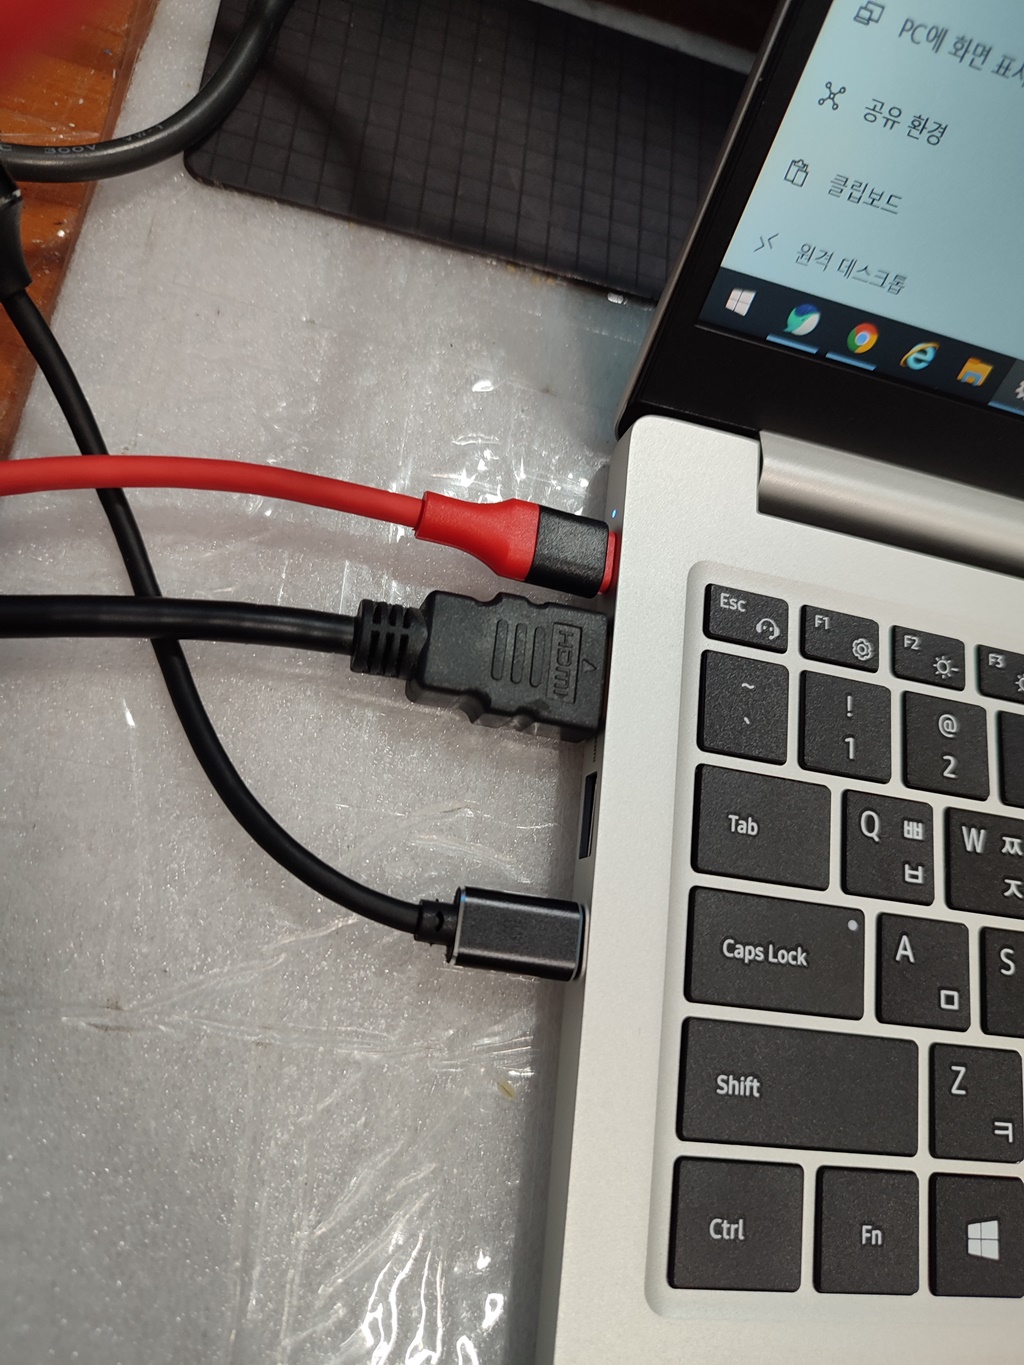 USB C to HDMI 변환 젠더와 케이블 + HDMI 케이블을 이용해서 모니터 출력 확인 중